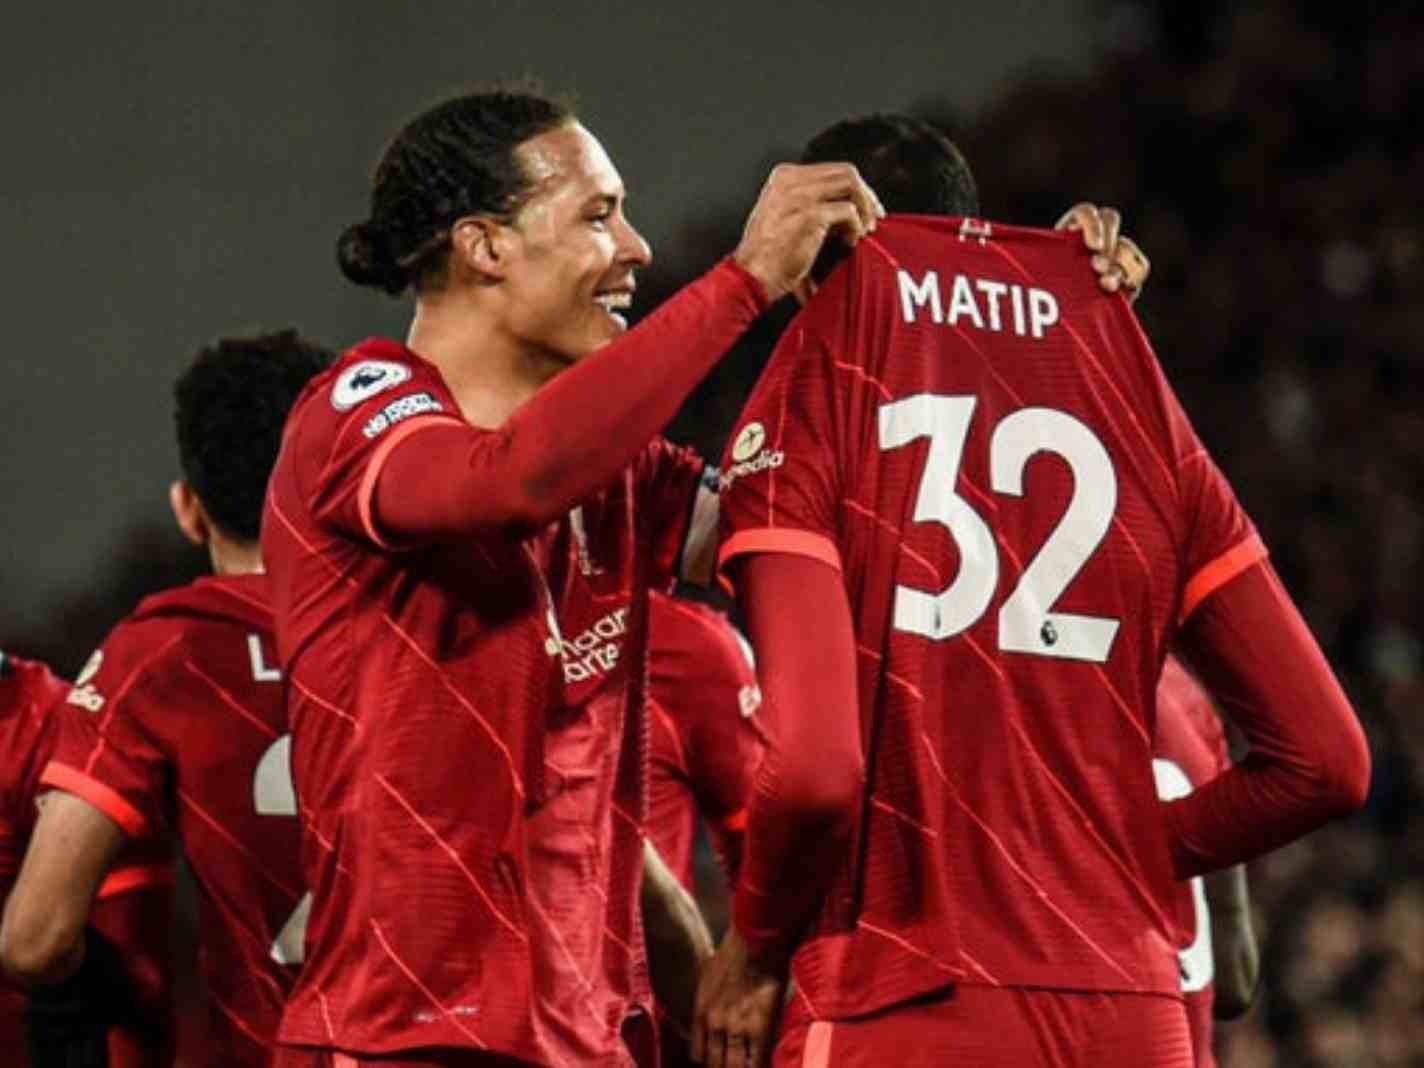 Wholesome: Virgil van Dijk celebrates Joel Matip’s goal like a proud brother